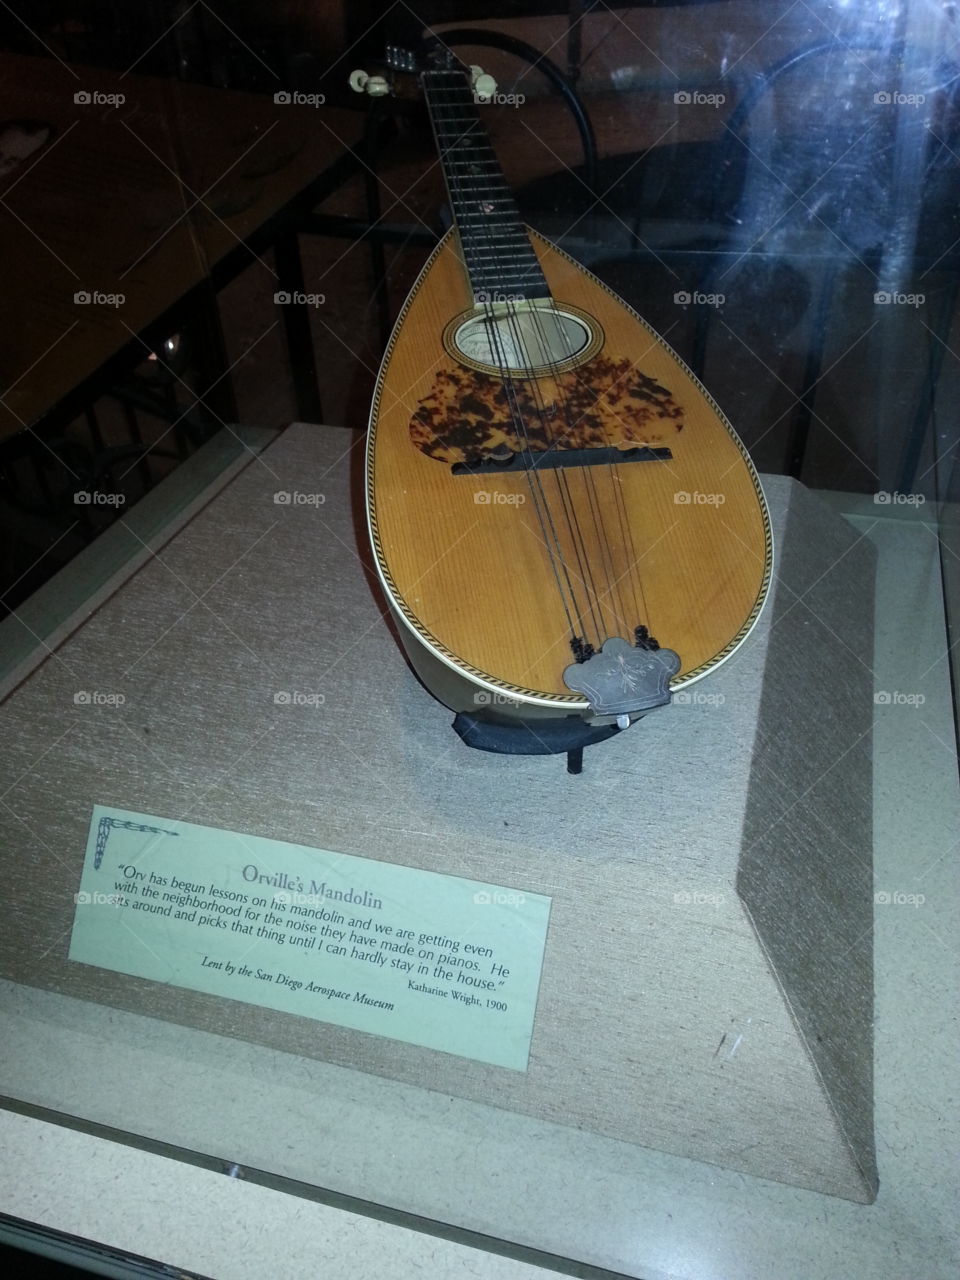 Orville Wright's mandolin